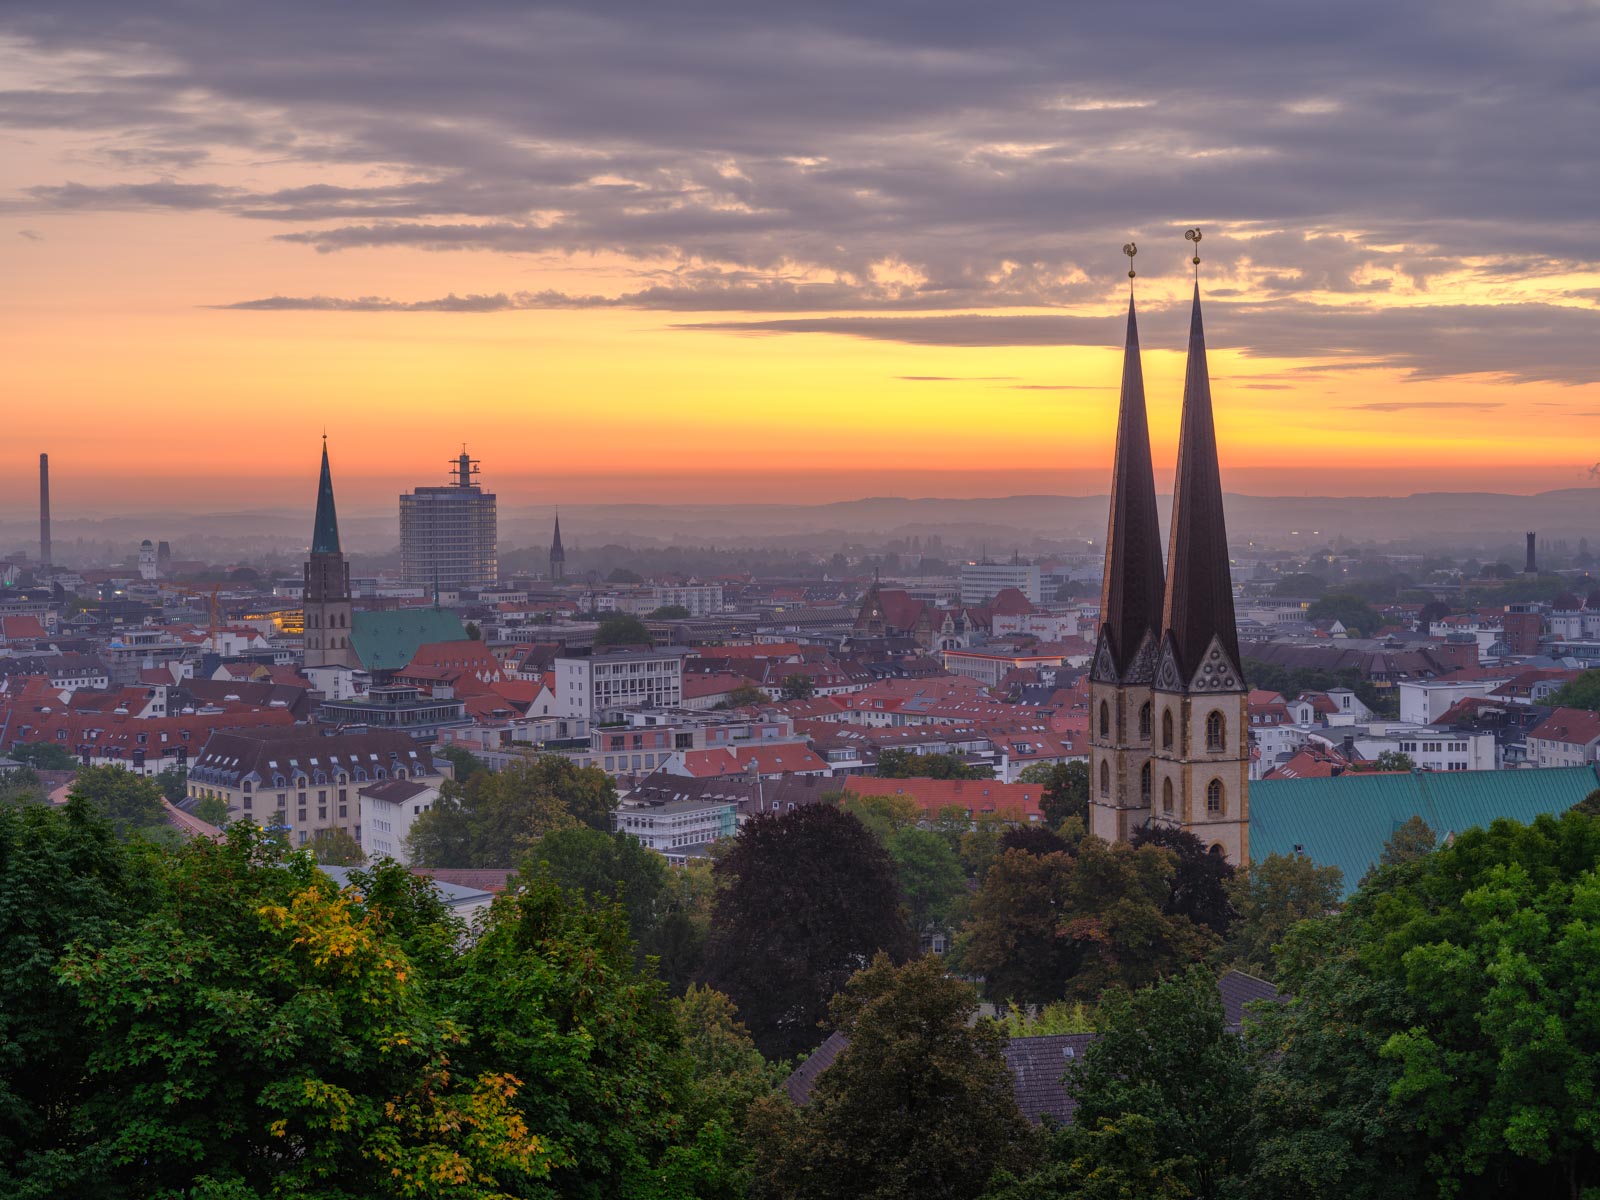 Dawn over Bielefeld city center in September 2021 #1 (Germany)